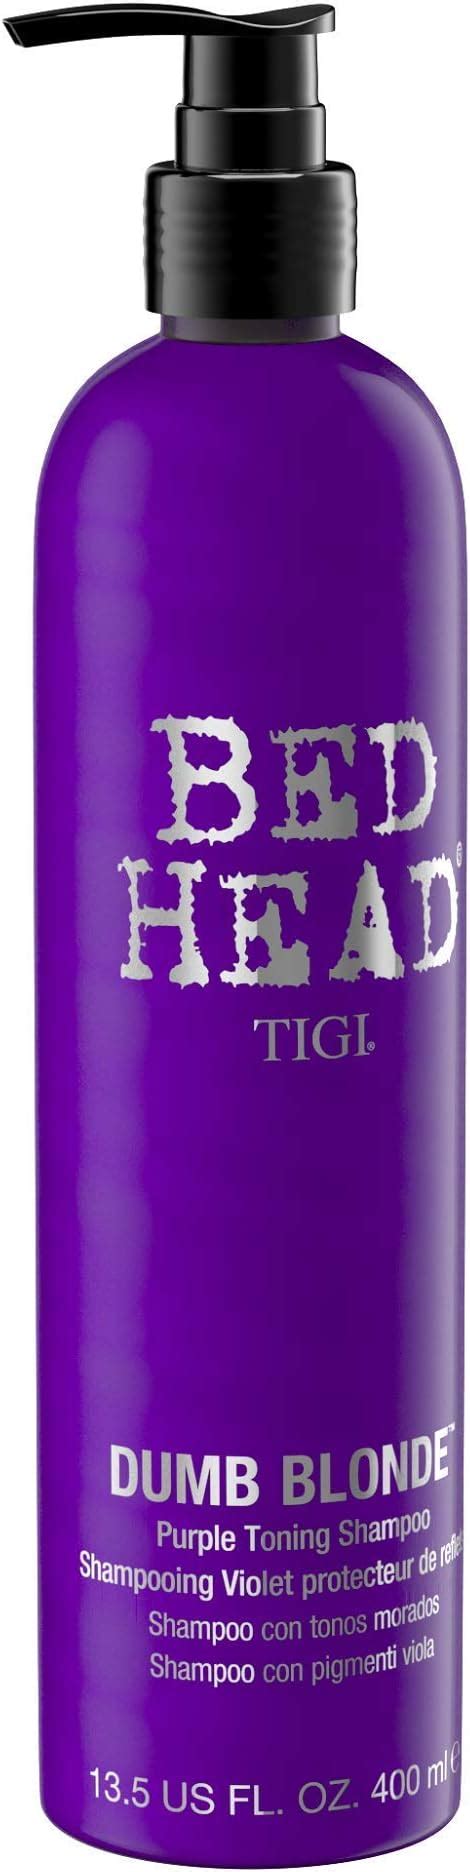 Tigi Bed Head By Tigi Dumb Blonde Purple Toning Shampoo For Blonde Hair 400 Ml Uk